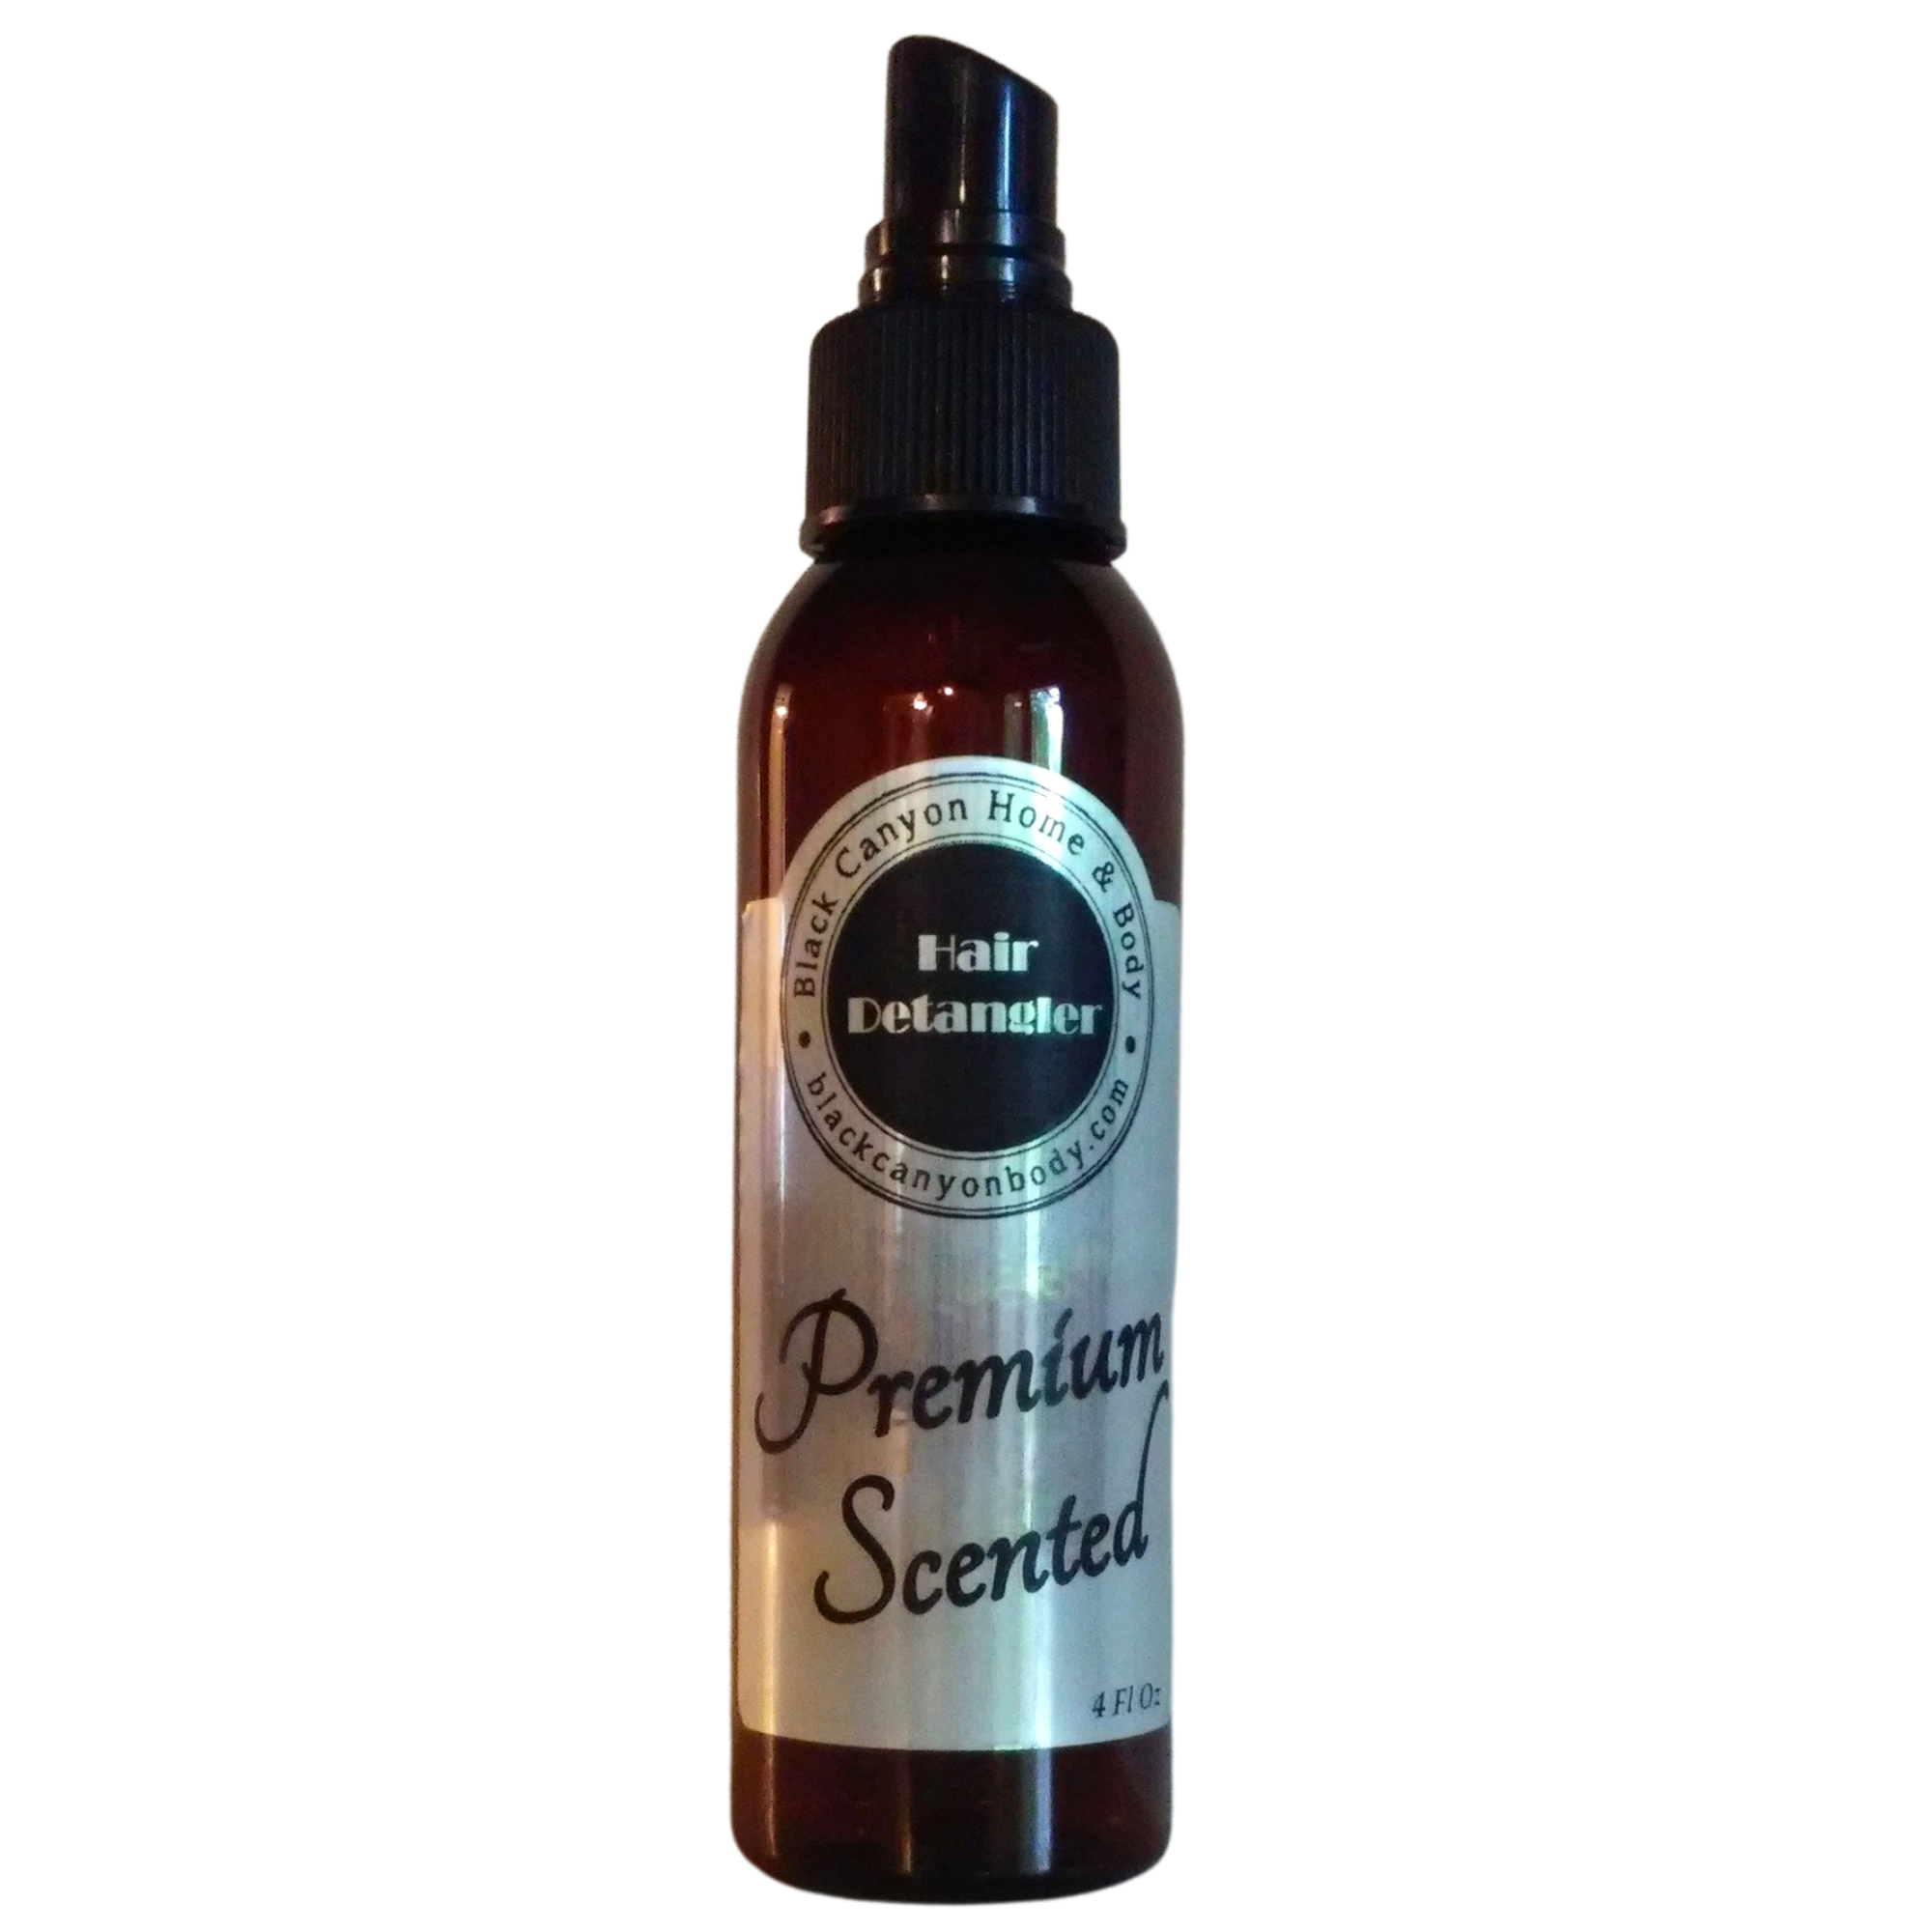 Black Canyon Honeysuckle & Jasmine Scented Hair Detangler Spray with Olive Oil